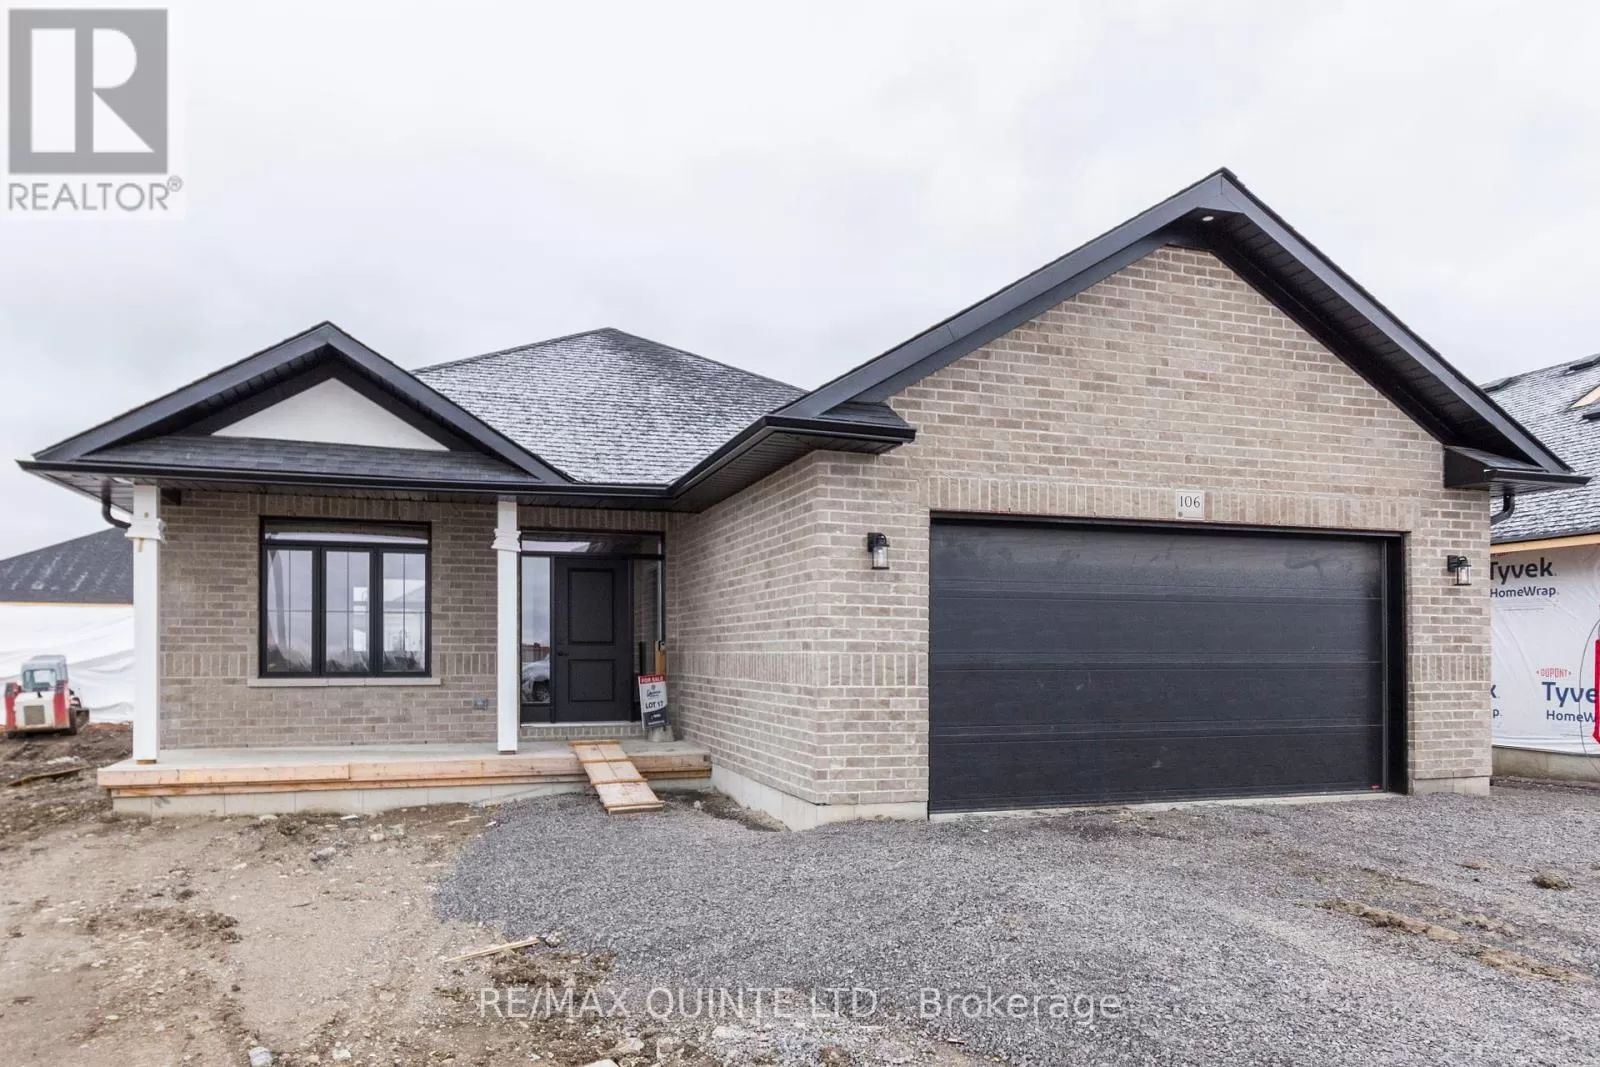 House for rent: 106 Raycroft Drive, Belleville, Ontario K8N 0R4